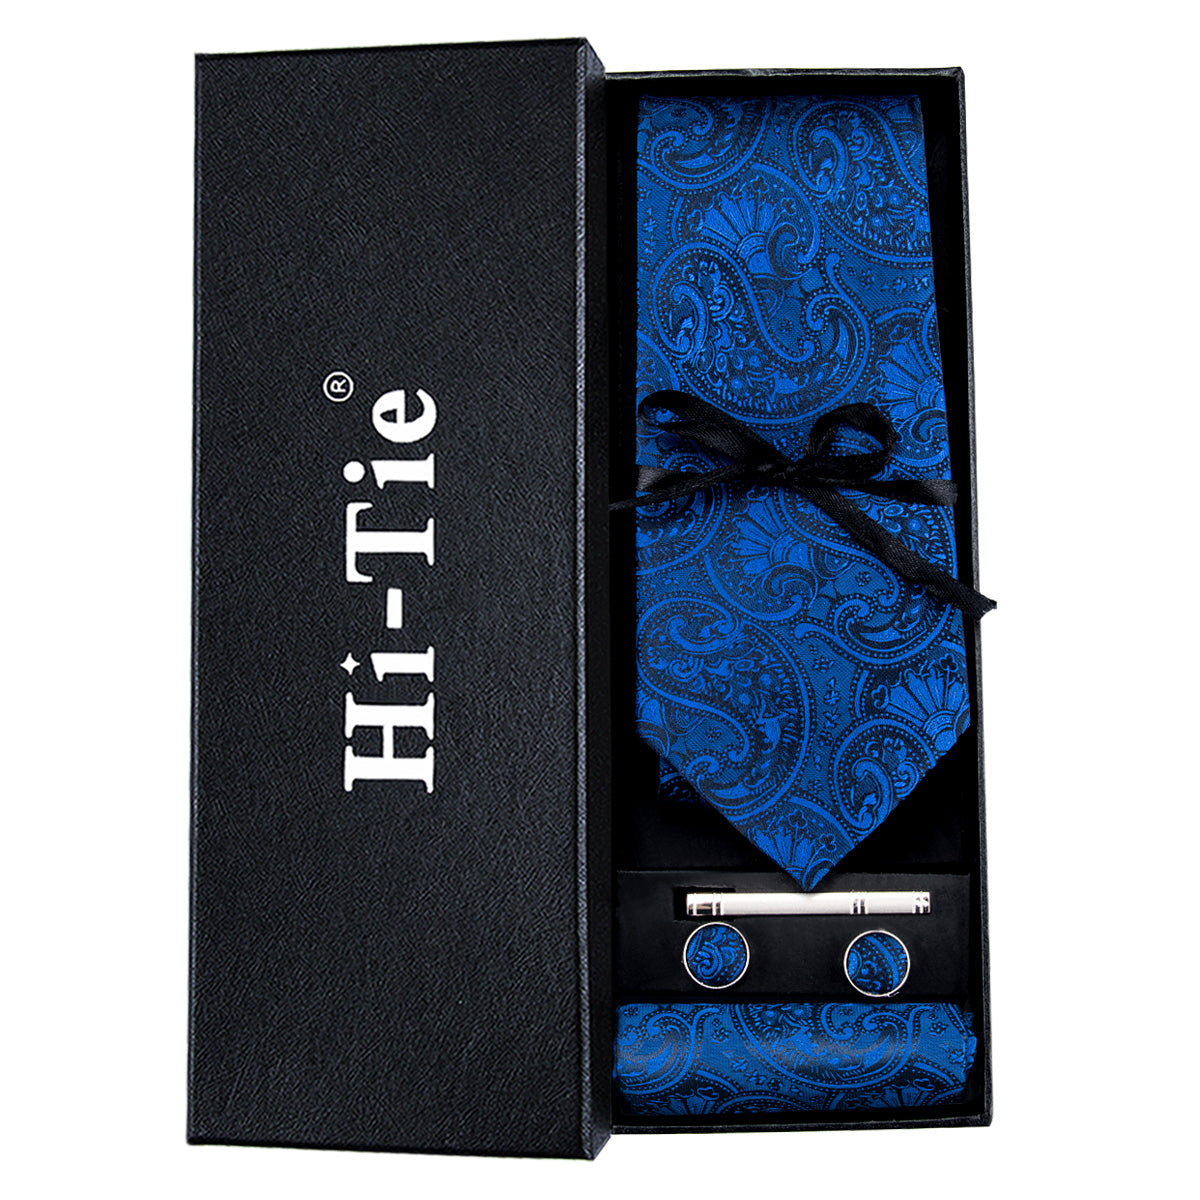 Fanstastic Blue Paisley Tie Pocket Square Cufflinks Set Gift Box Set